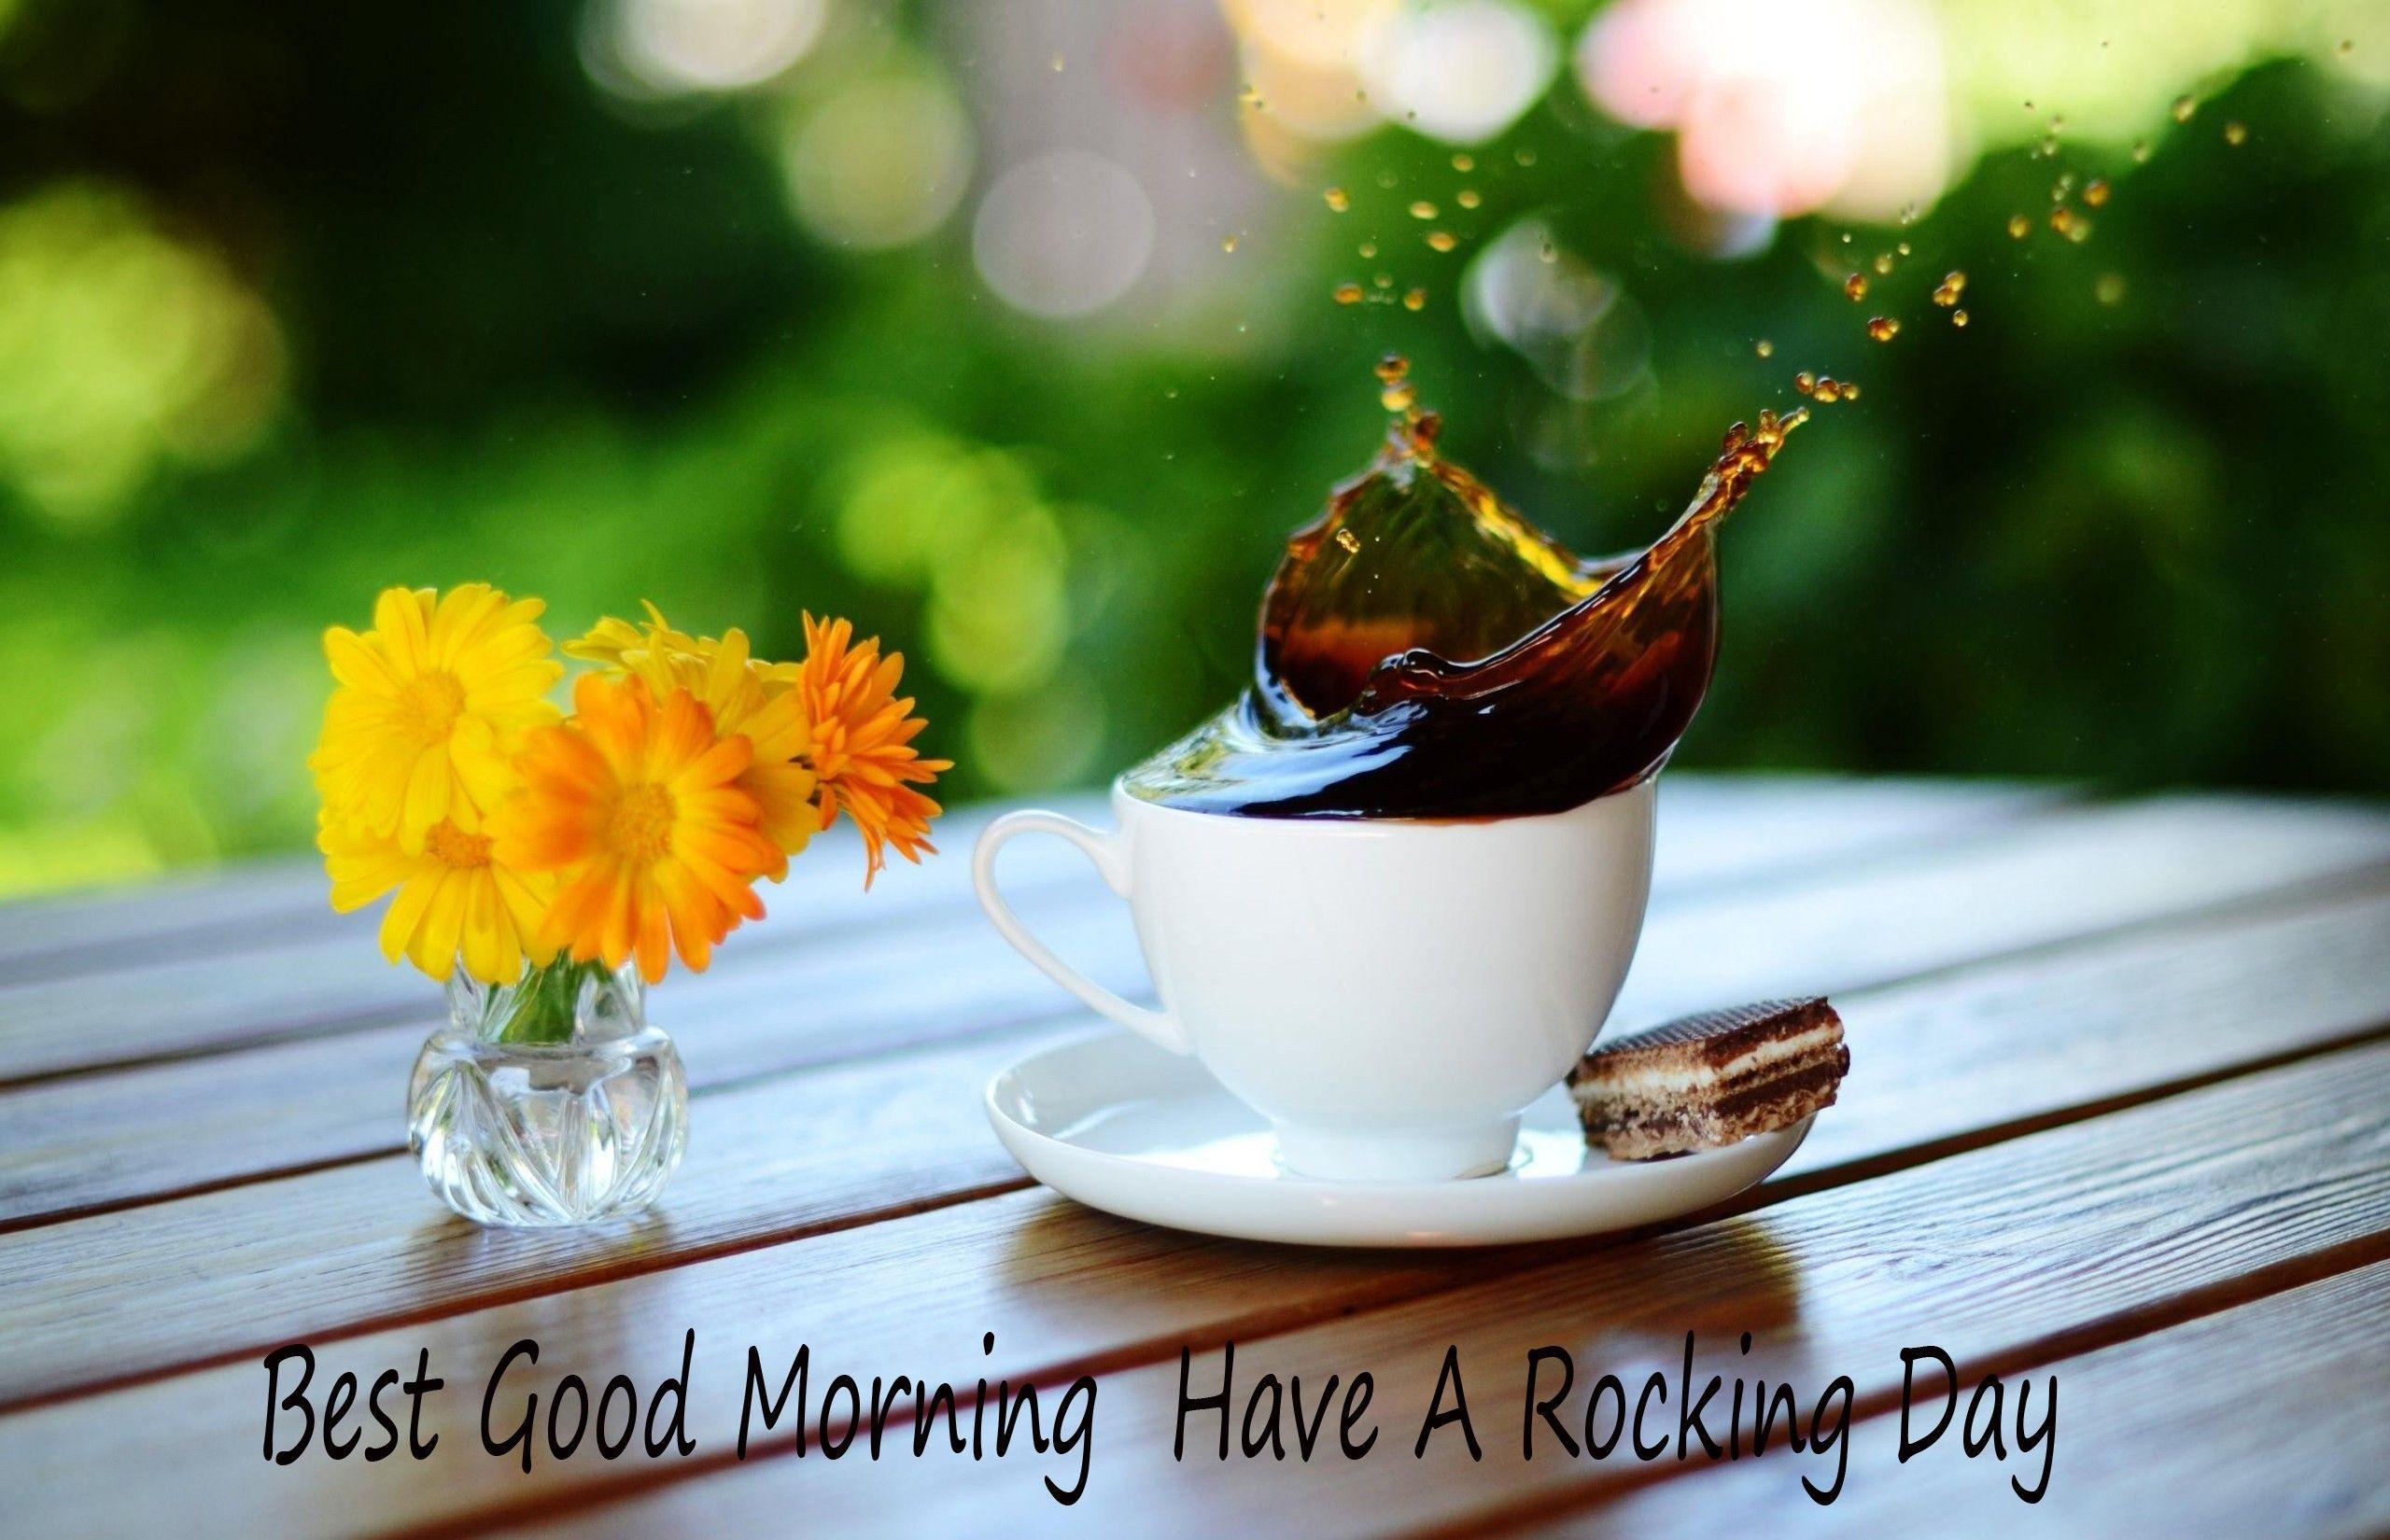 Beautiful Good Morning Wallpaper Image And Photo Free Download